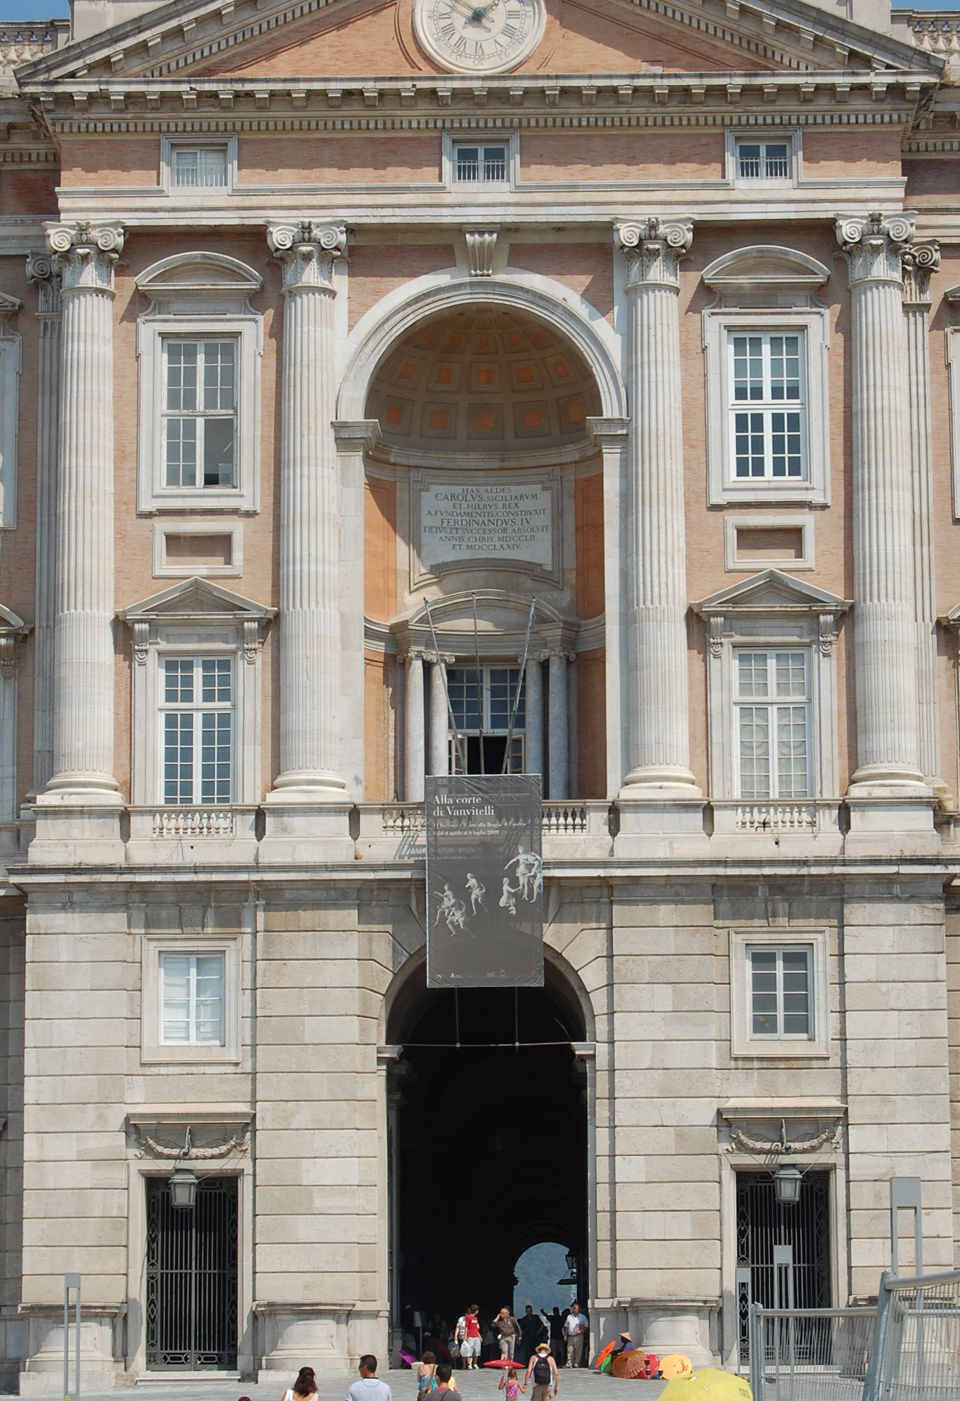 Palazzo Reale, a bit closer in